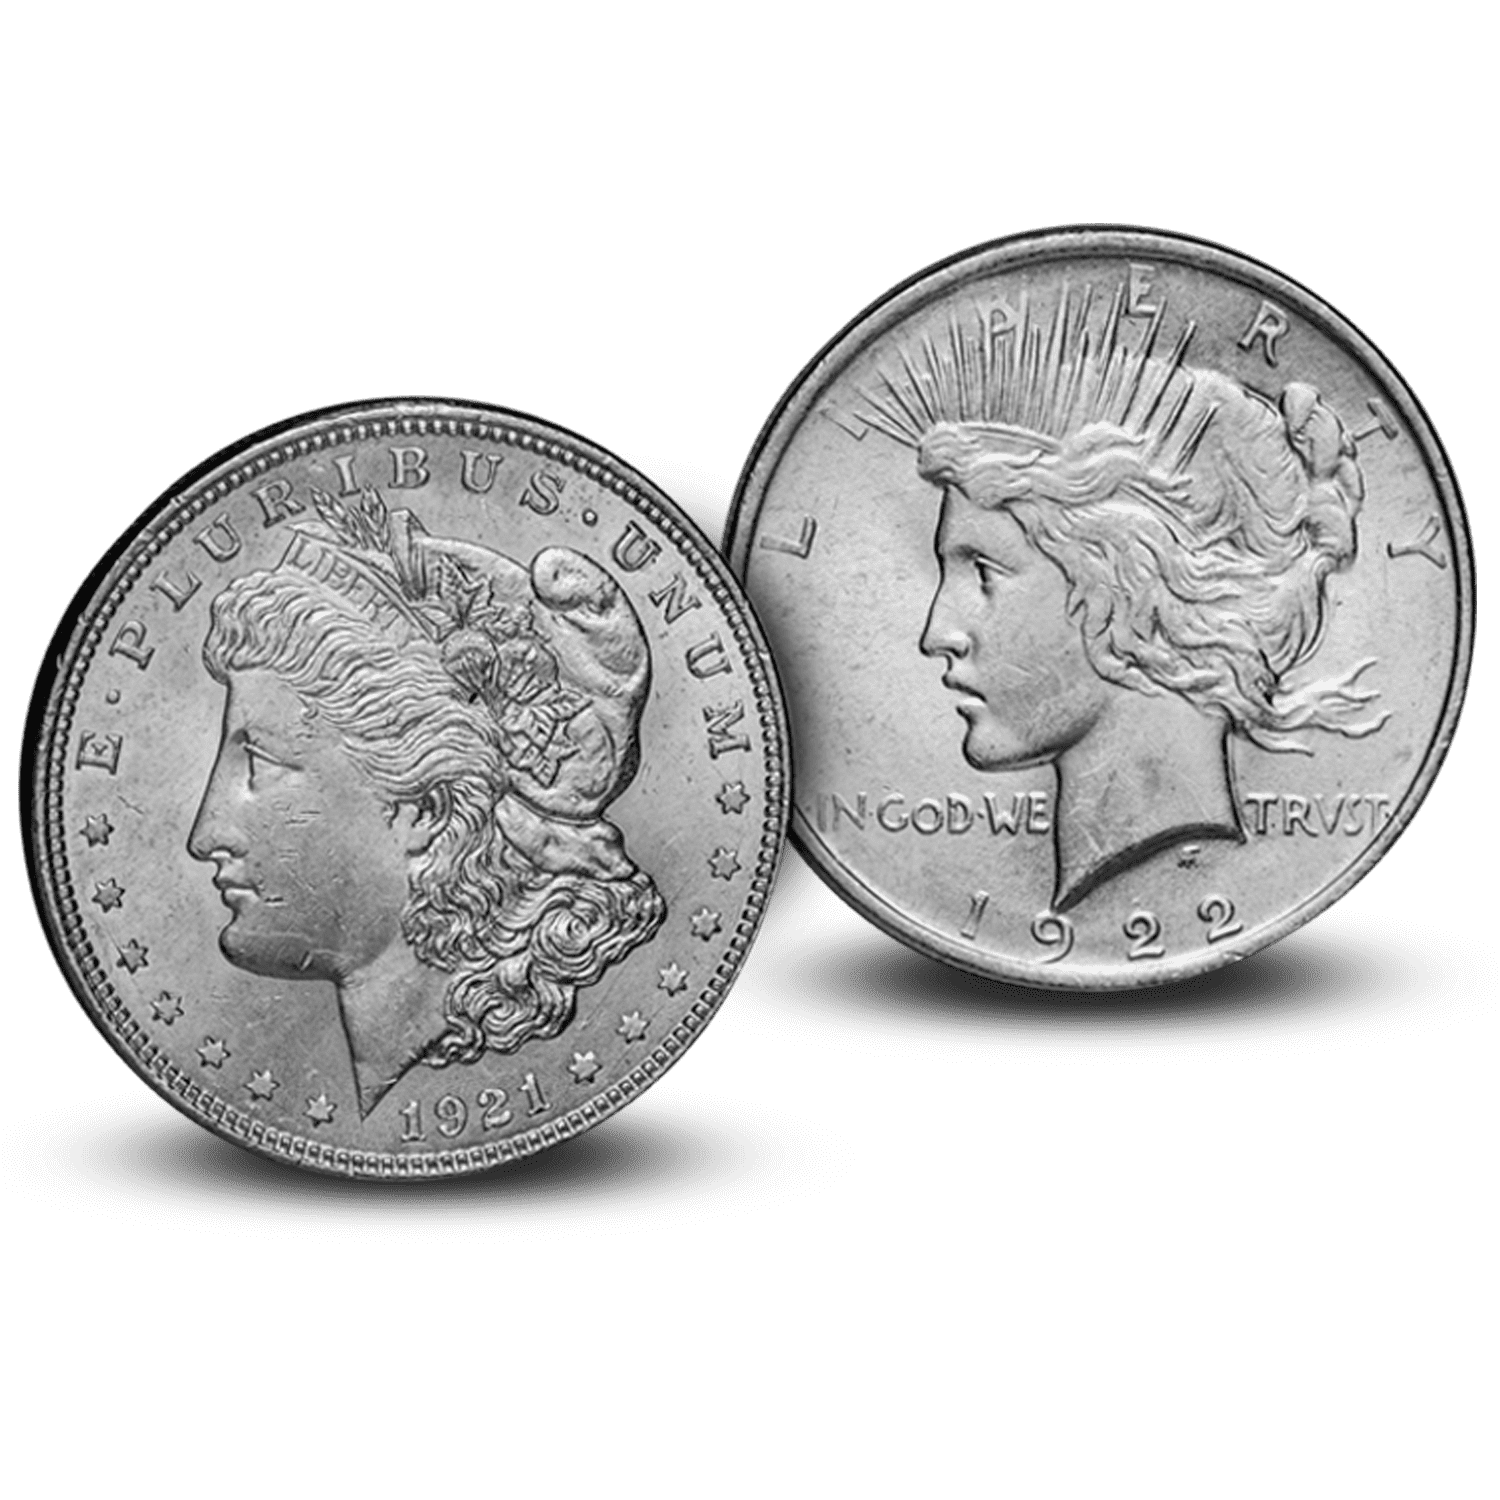 1883-CC Morgan Dollar CAC/PCGS MS65 DMPL - Deep Mirror Proof Like - Free  Ship US - The Happy Coin